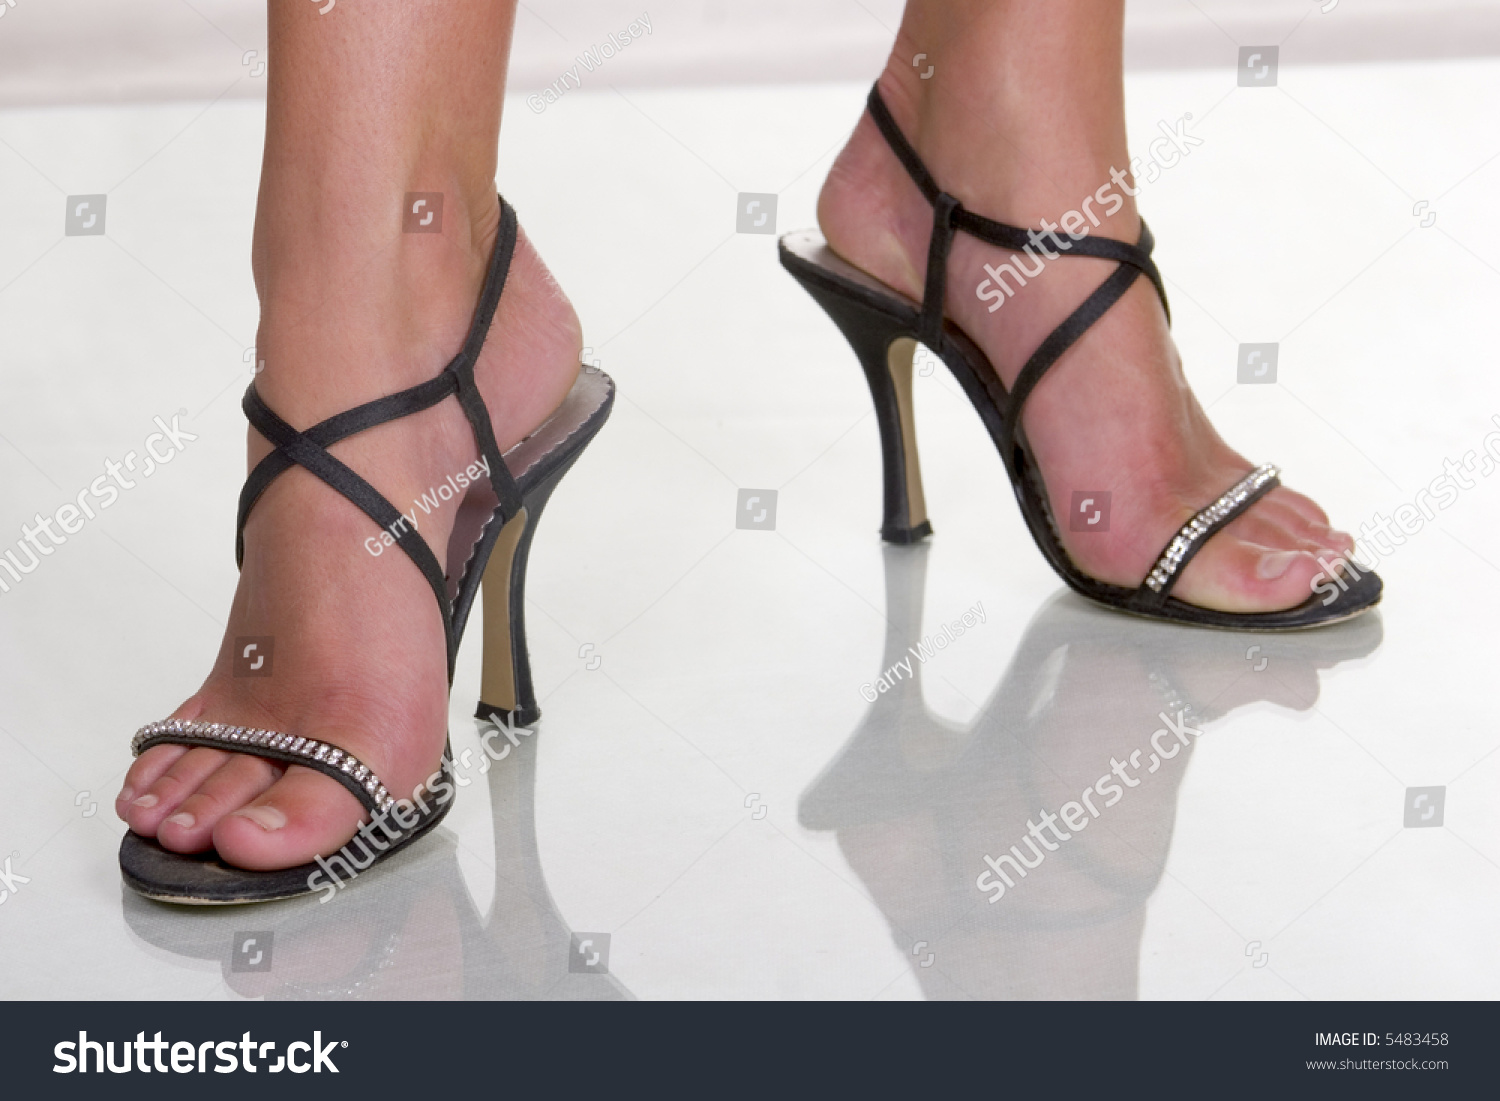 Sexy shoes feet